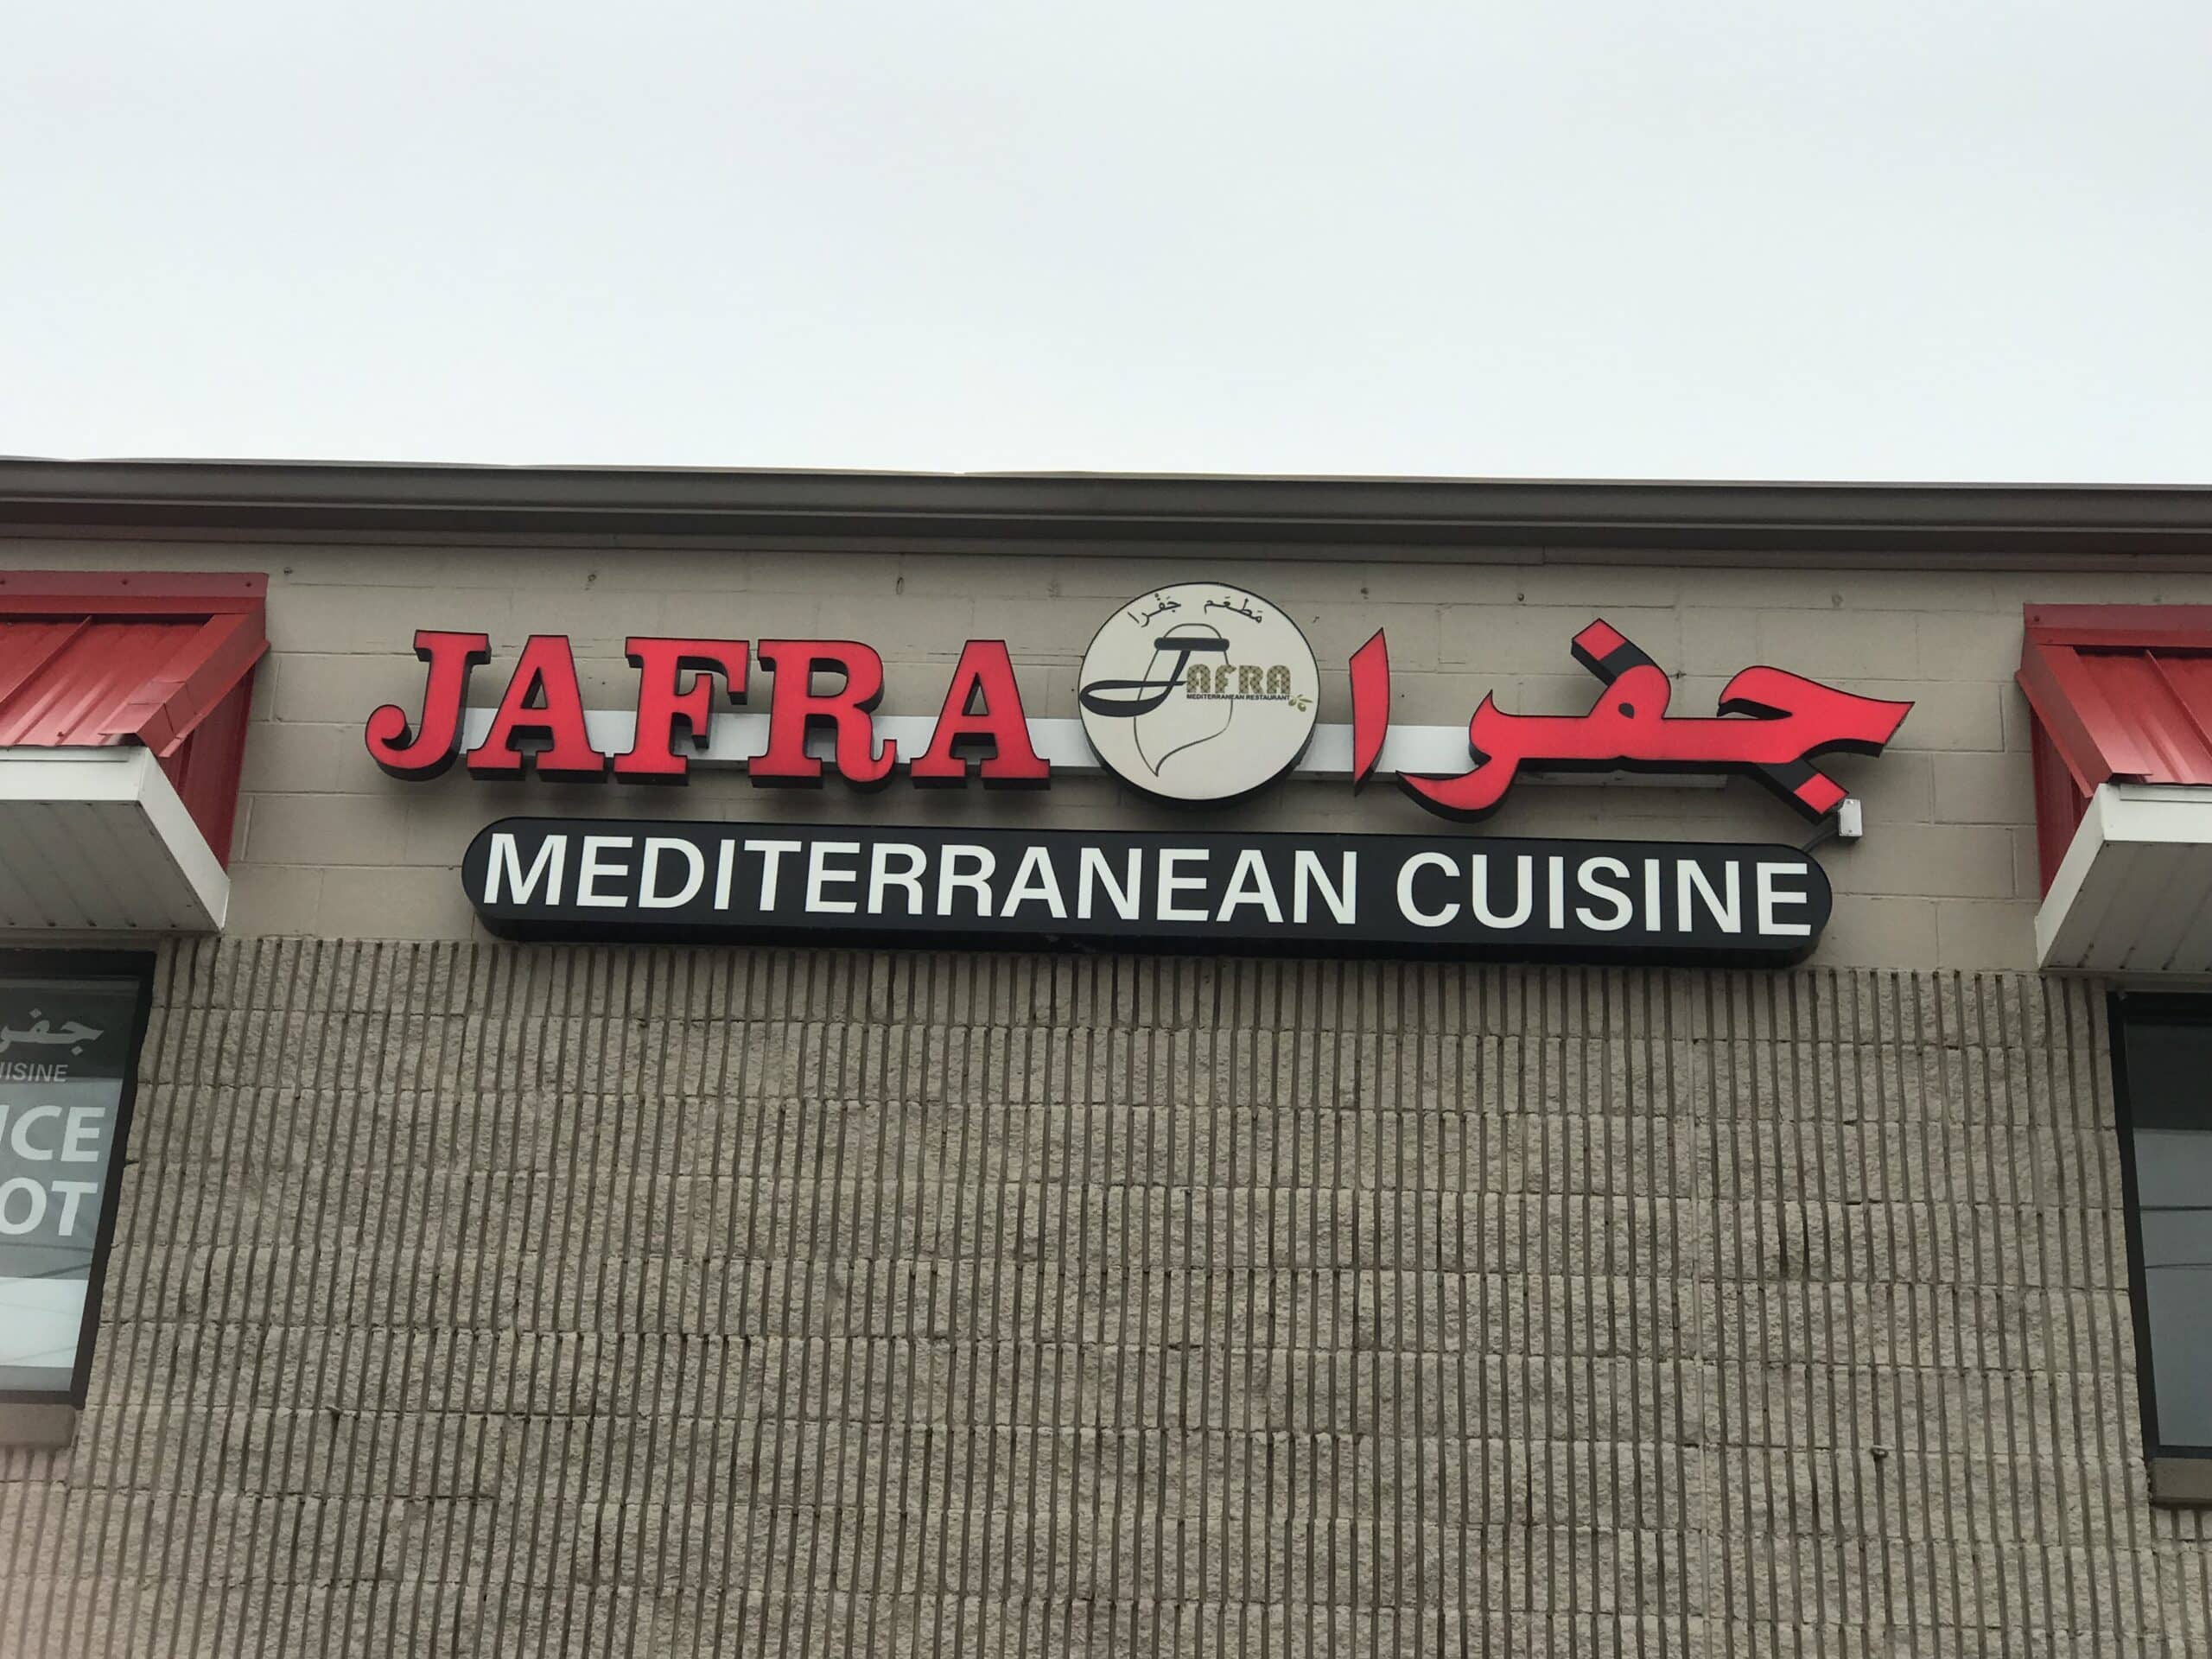 Jafra Mediterranean Restaurant, St. Charles, MO